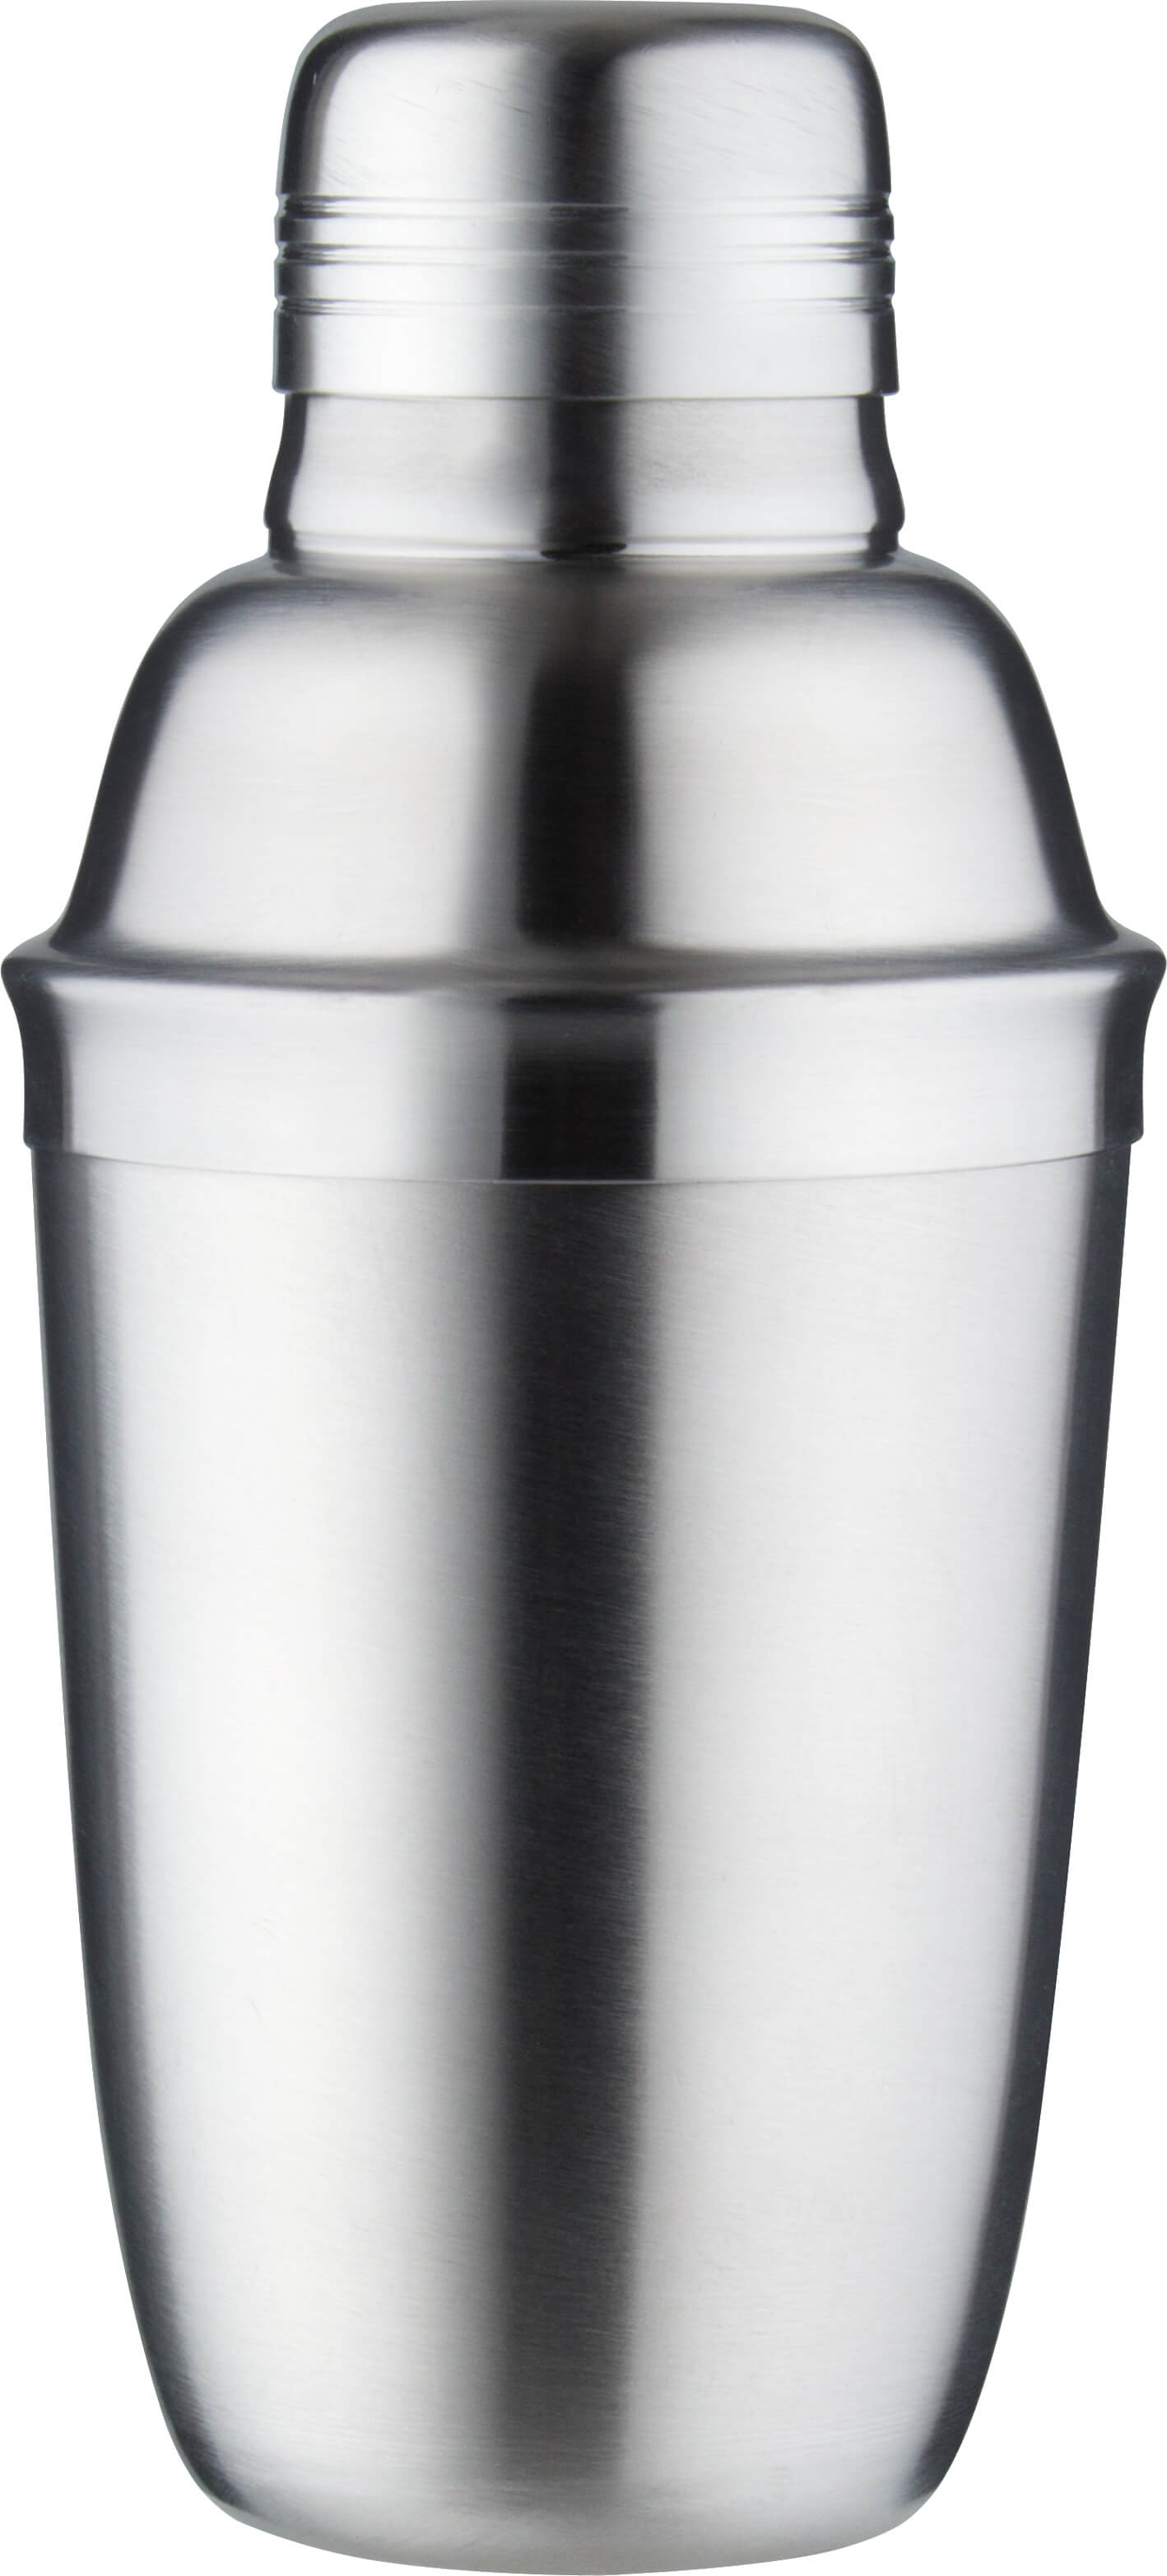 Mini Cocktail shaker, tripartite, stainless steel, 300ml